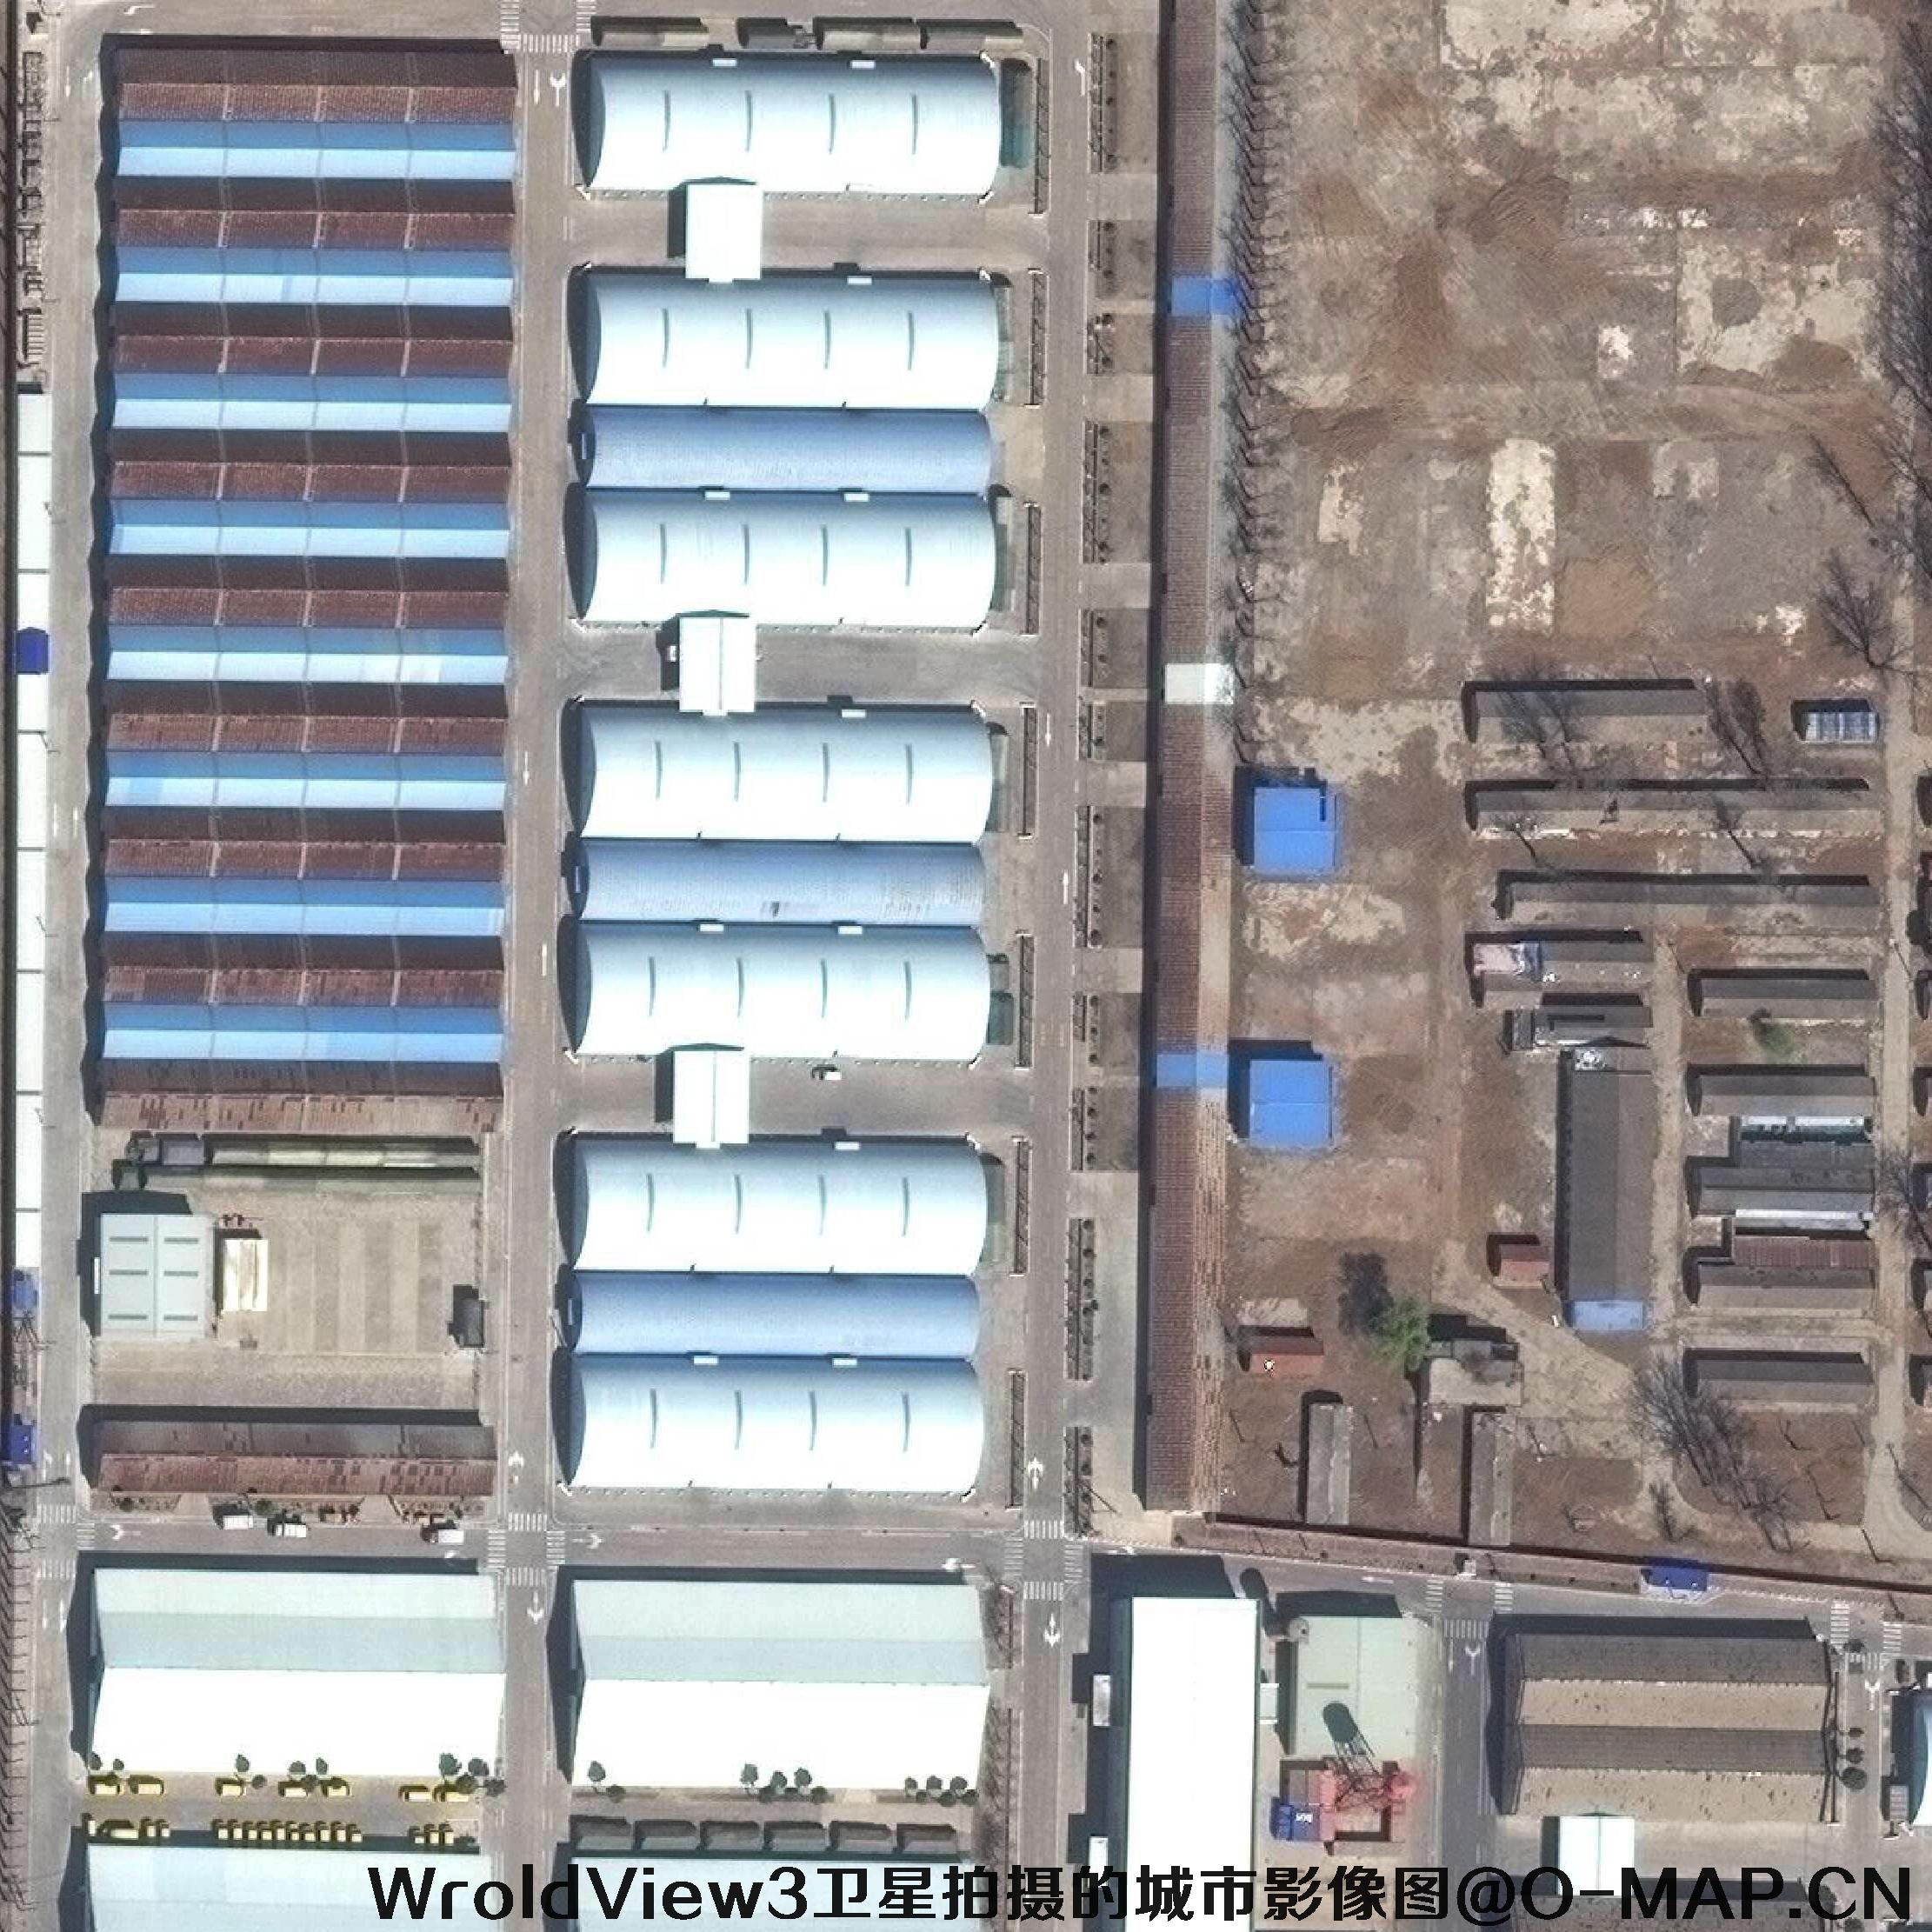 WroldView3卫星拍摄的0.3米城市影像图片